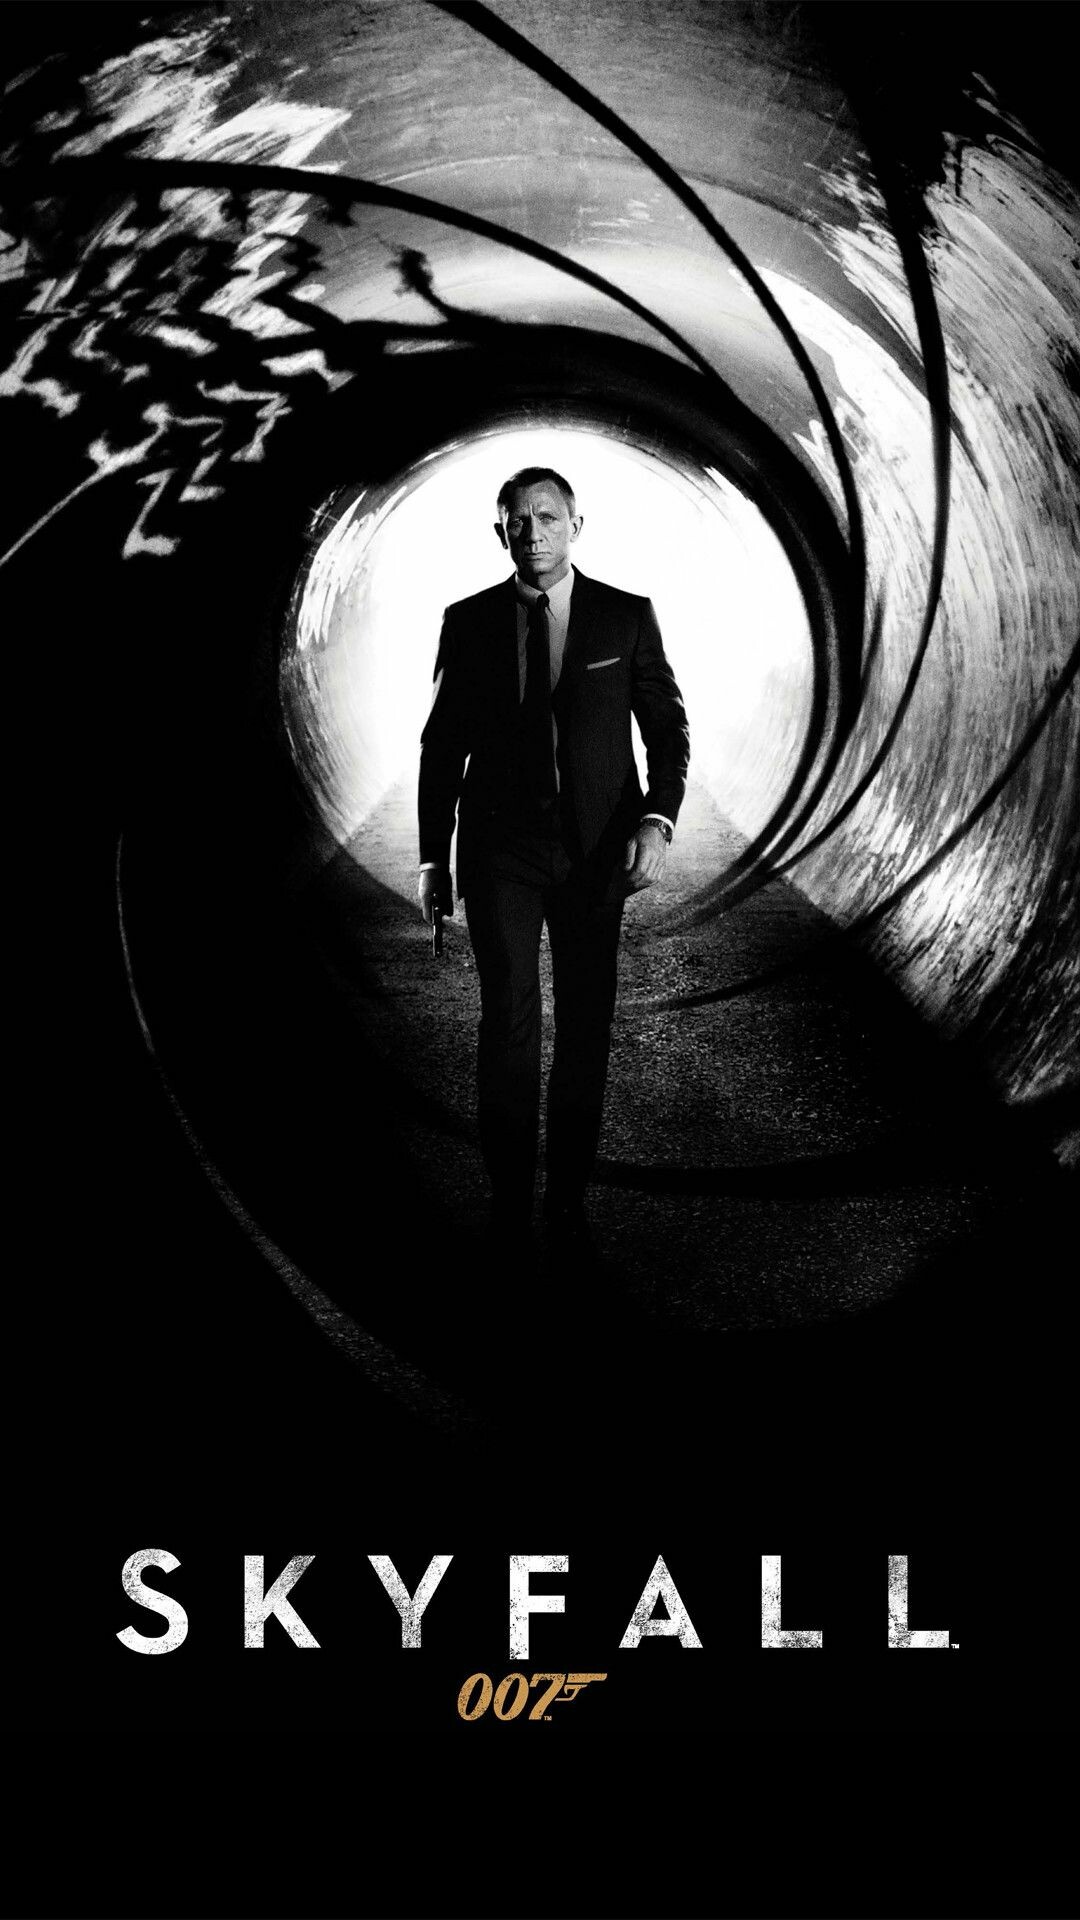 James Bond: Skyfall became the highest grossing 007 film of all time. 1080x1920 Full HD Wallpaper.